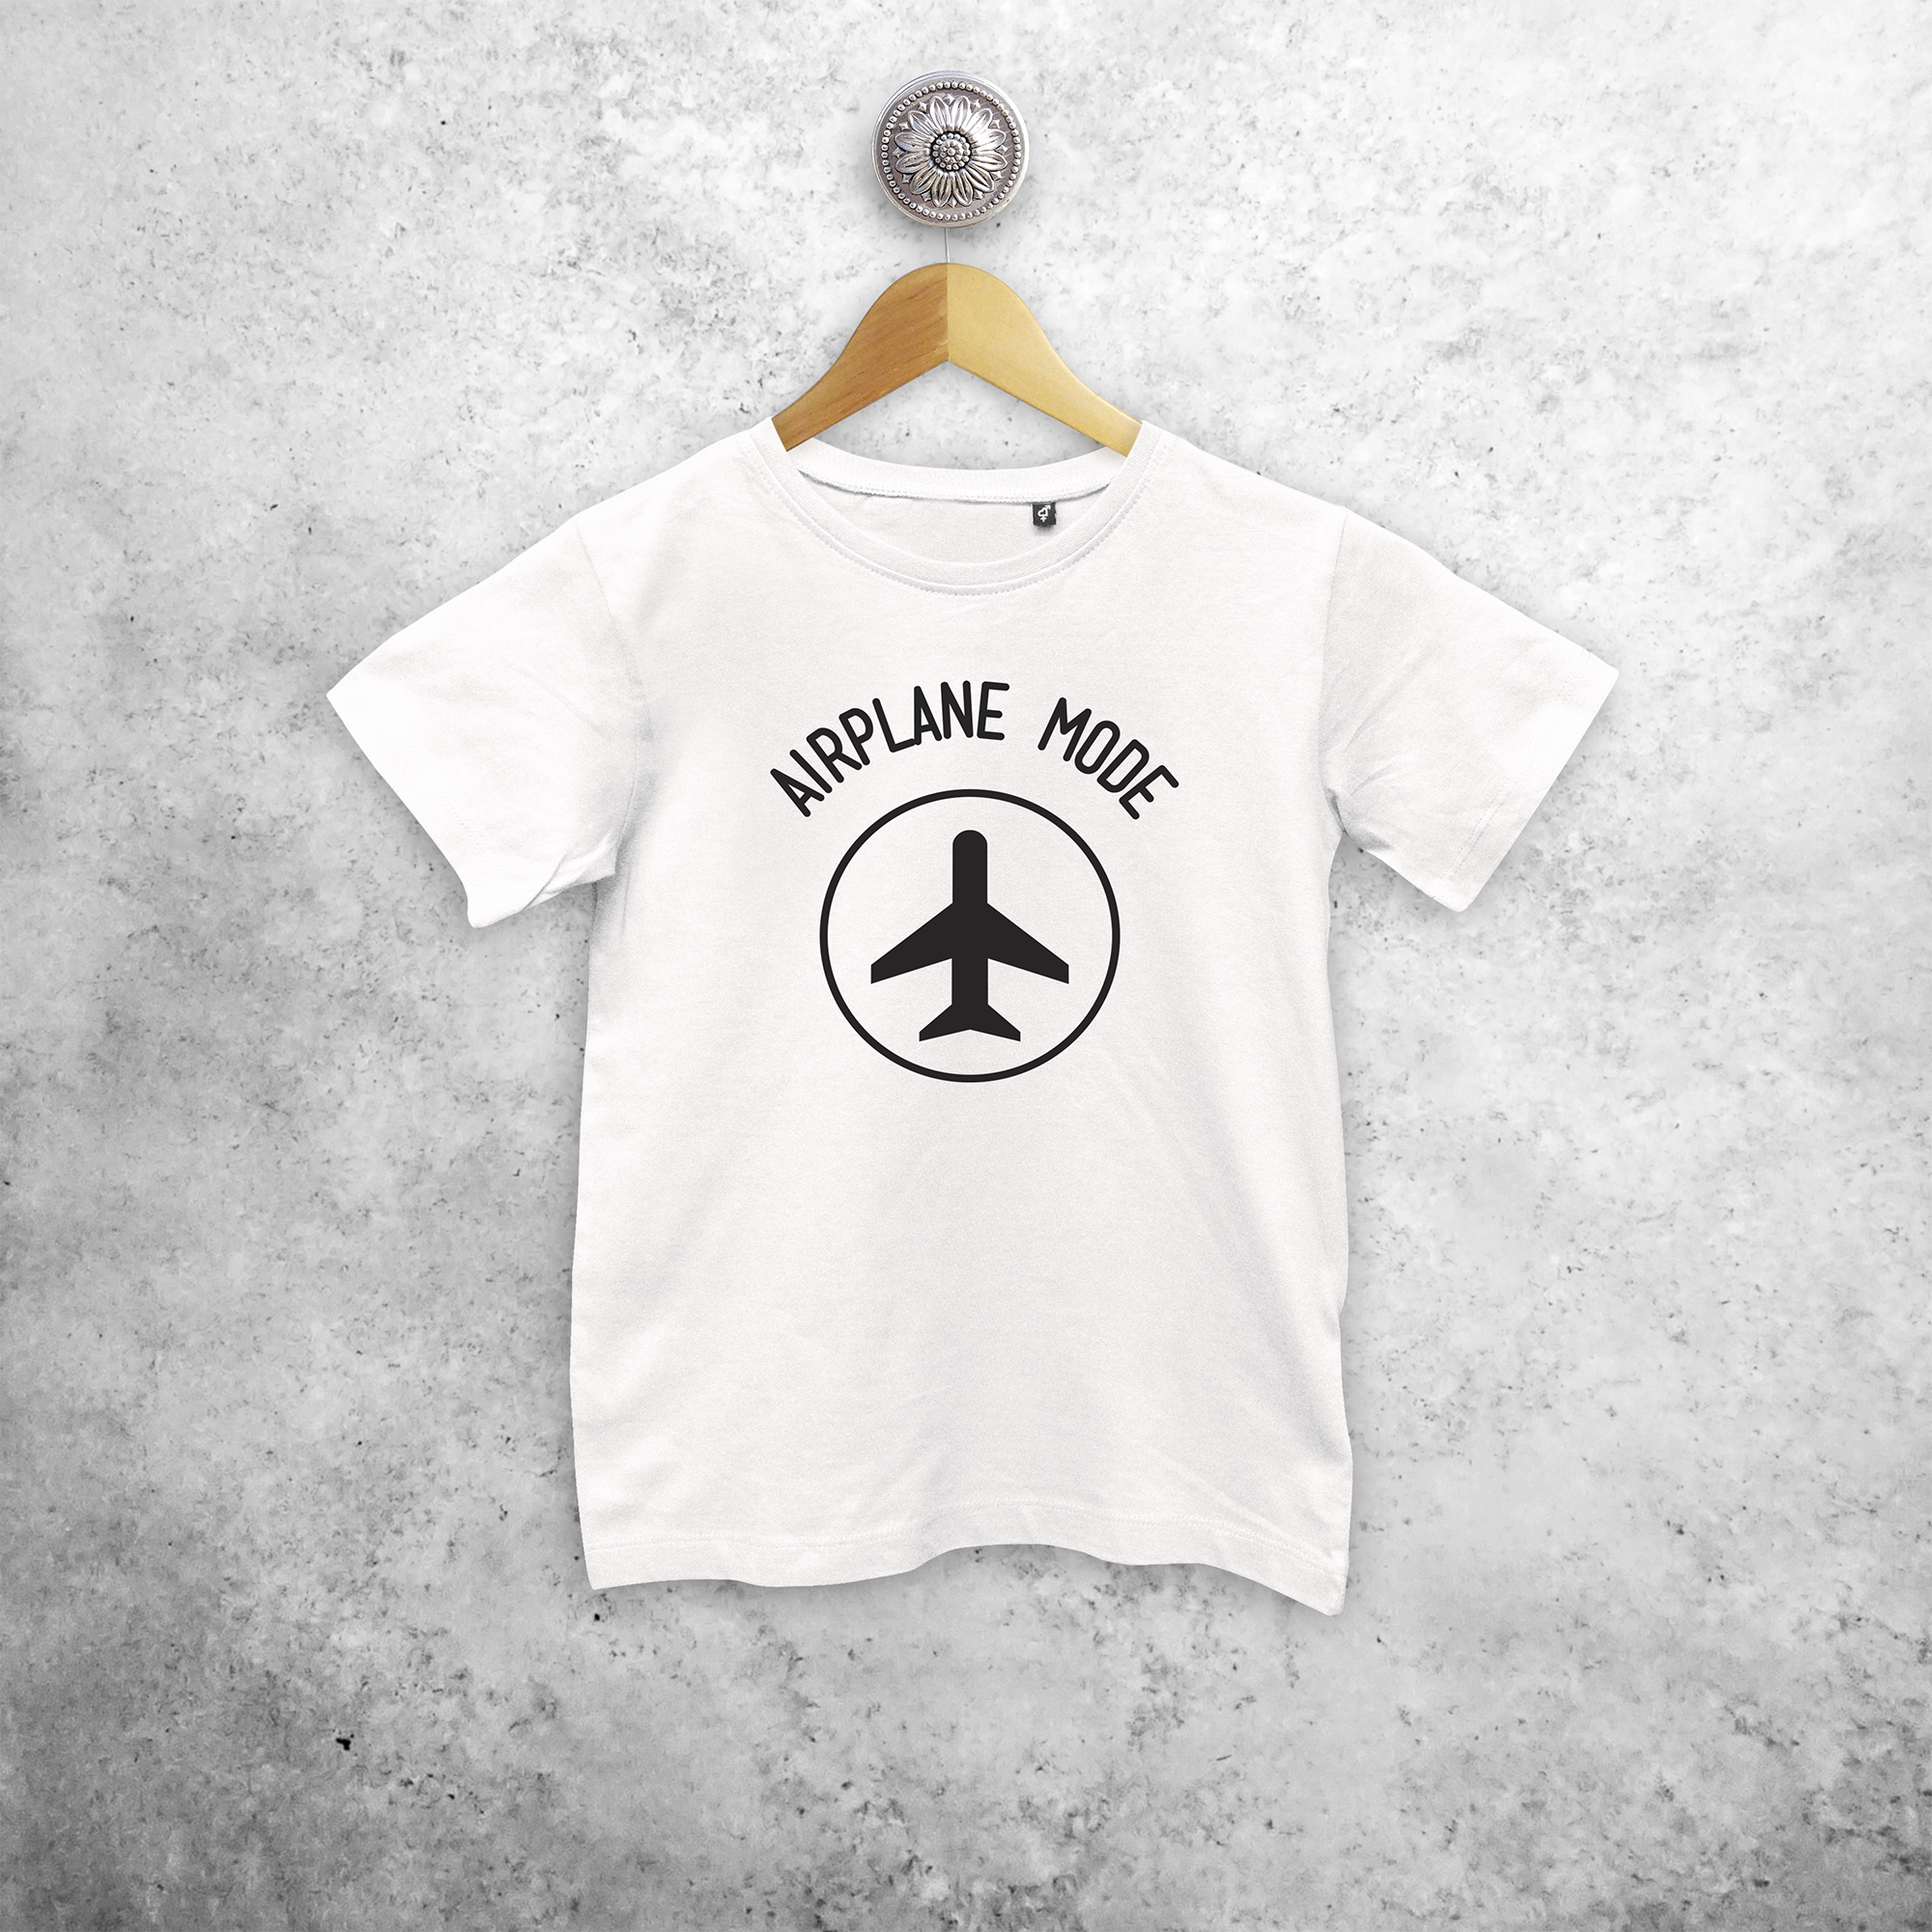 'Airplane mode' kids shortsleeve shirt